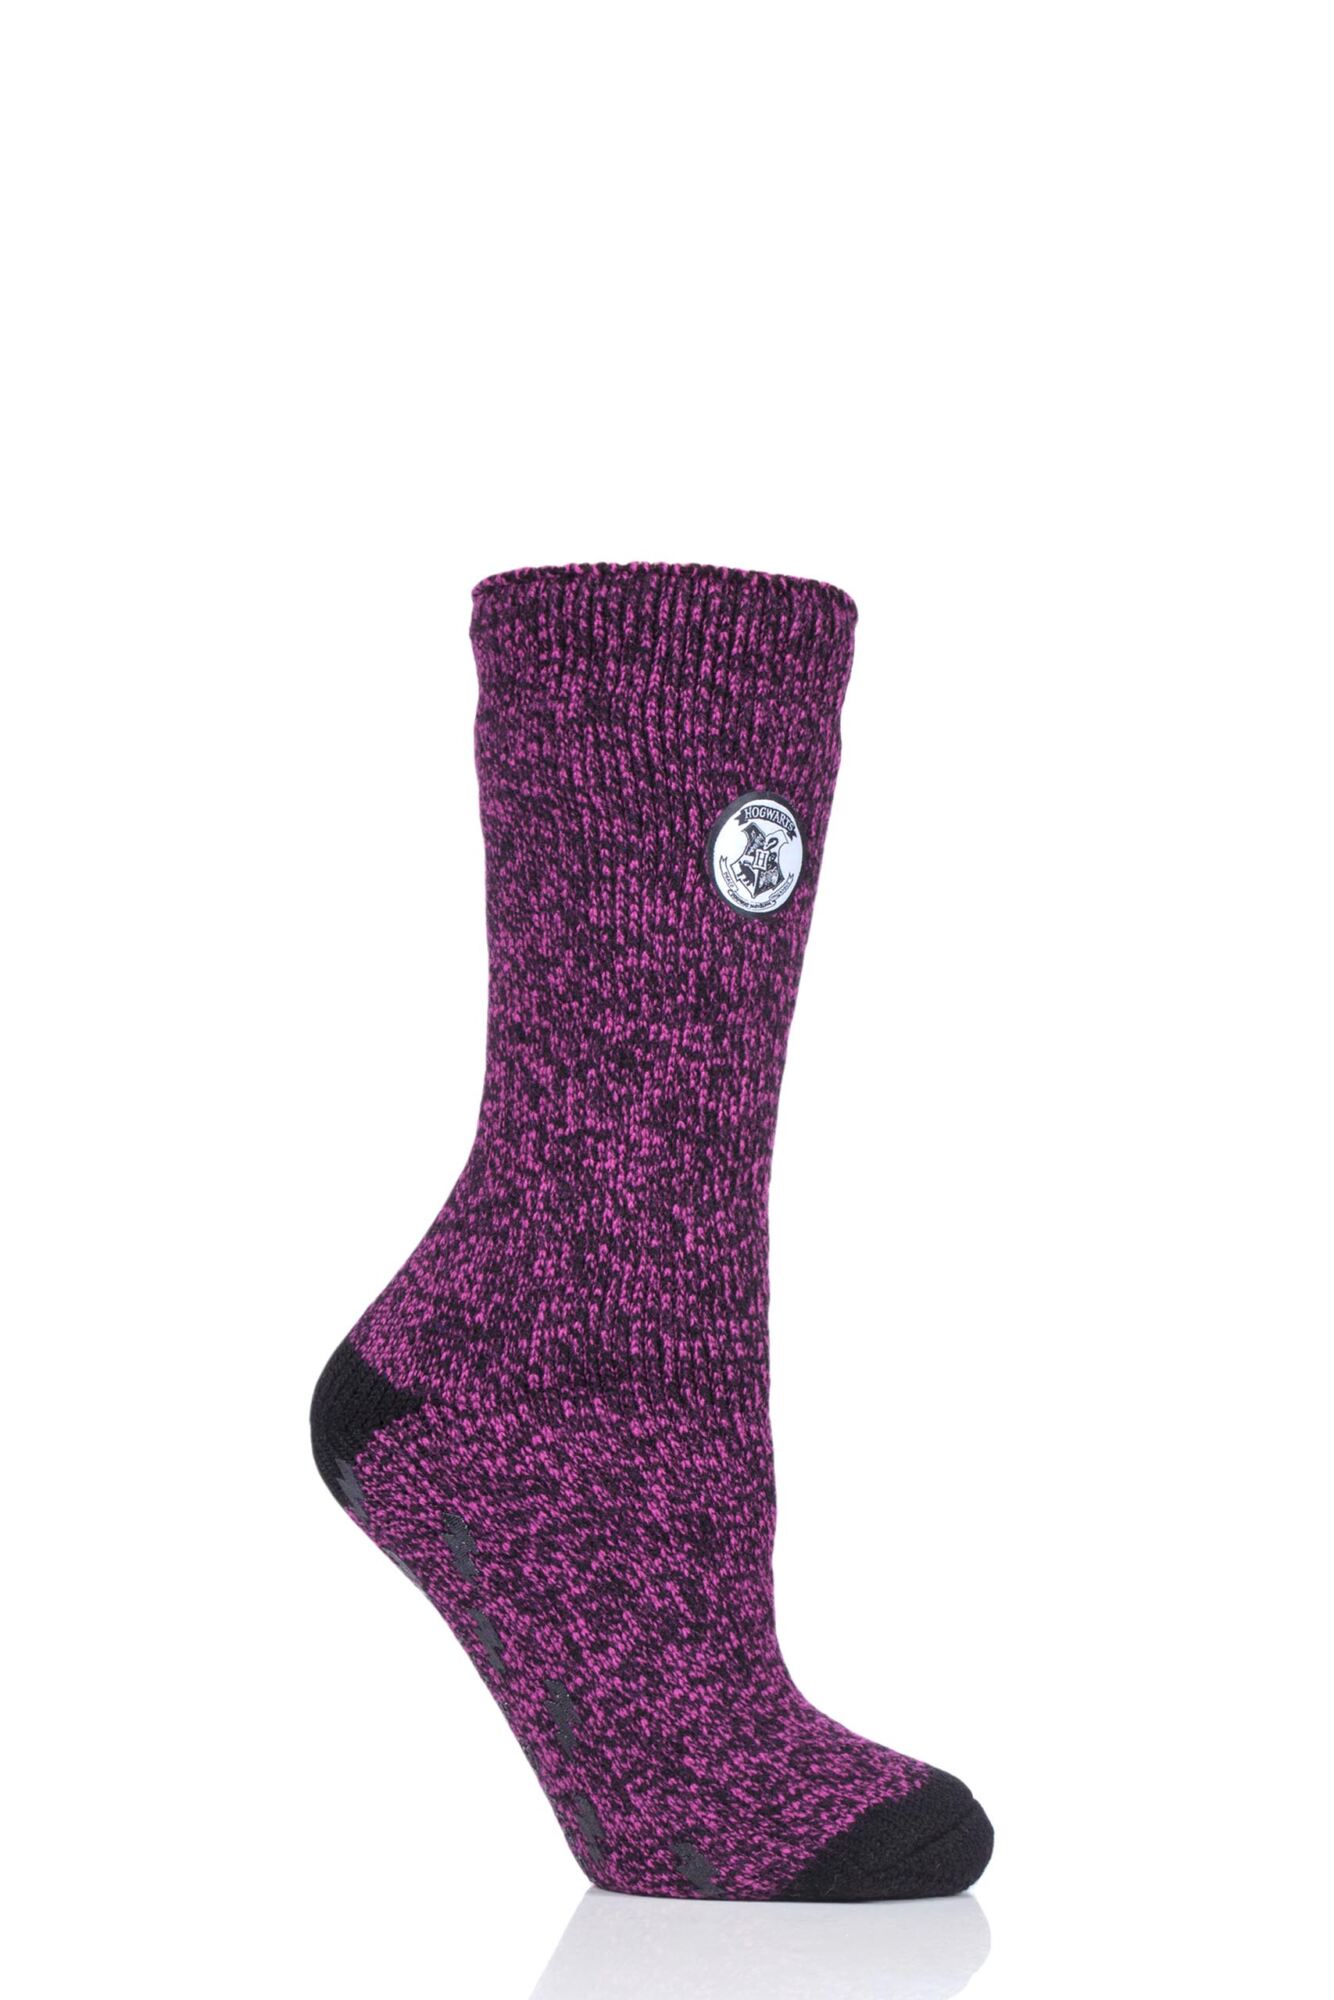 1 Pair Harry Potter Thermal Socks with Grips Ladies - Heat Holders